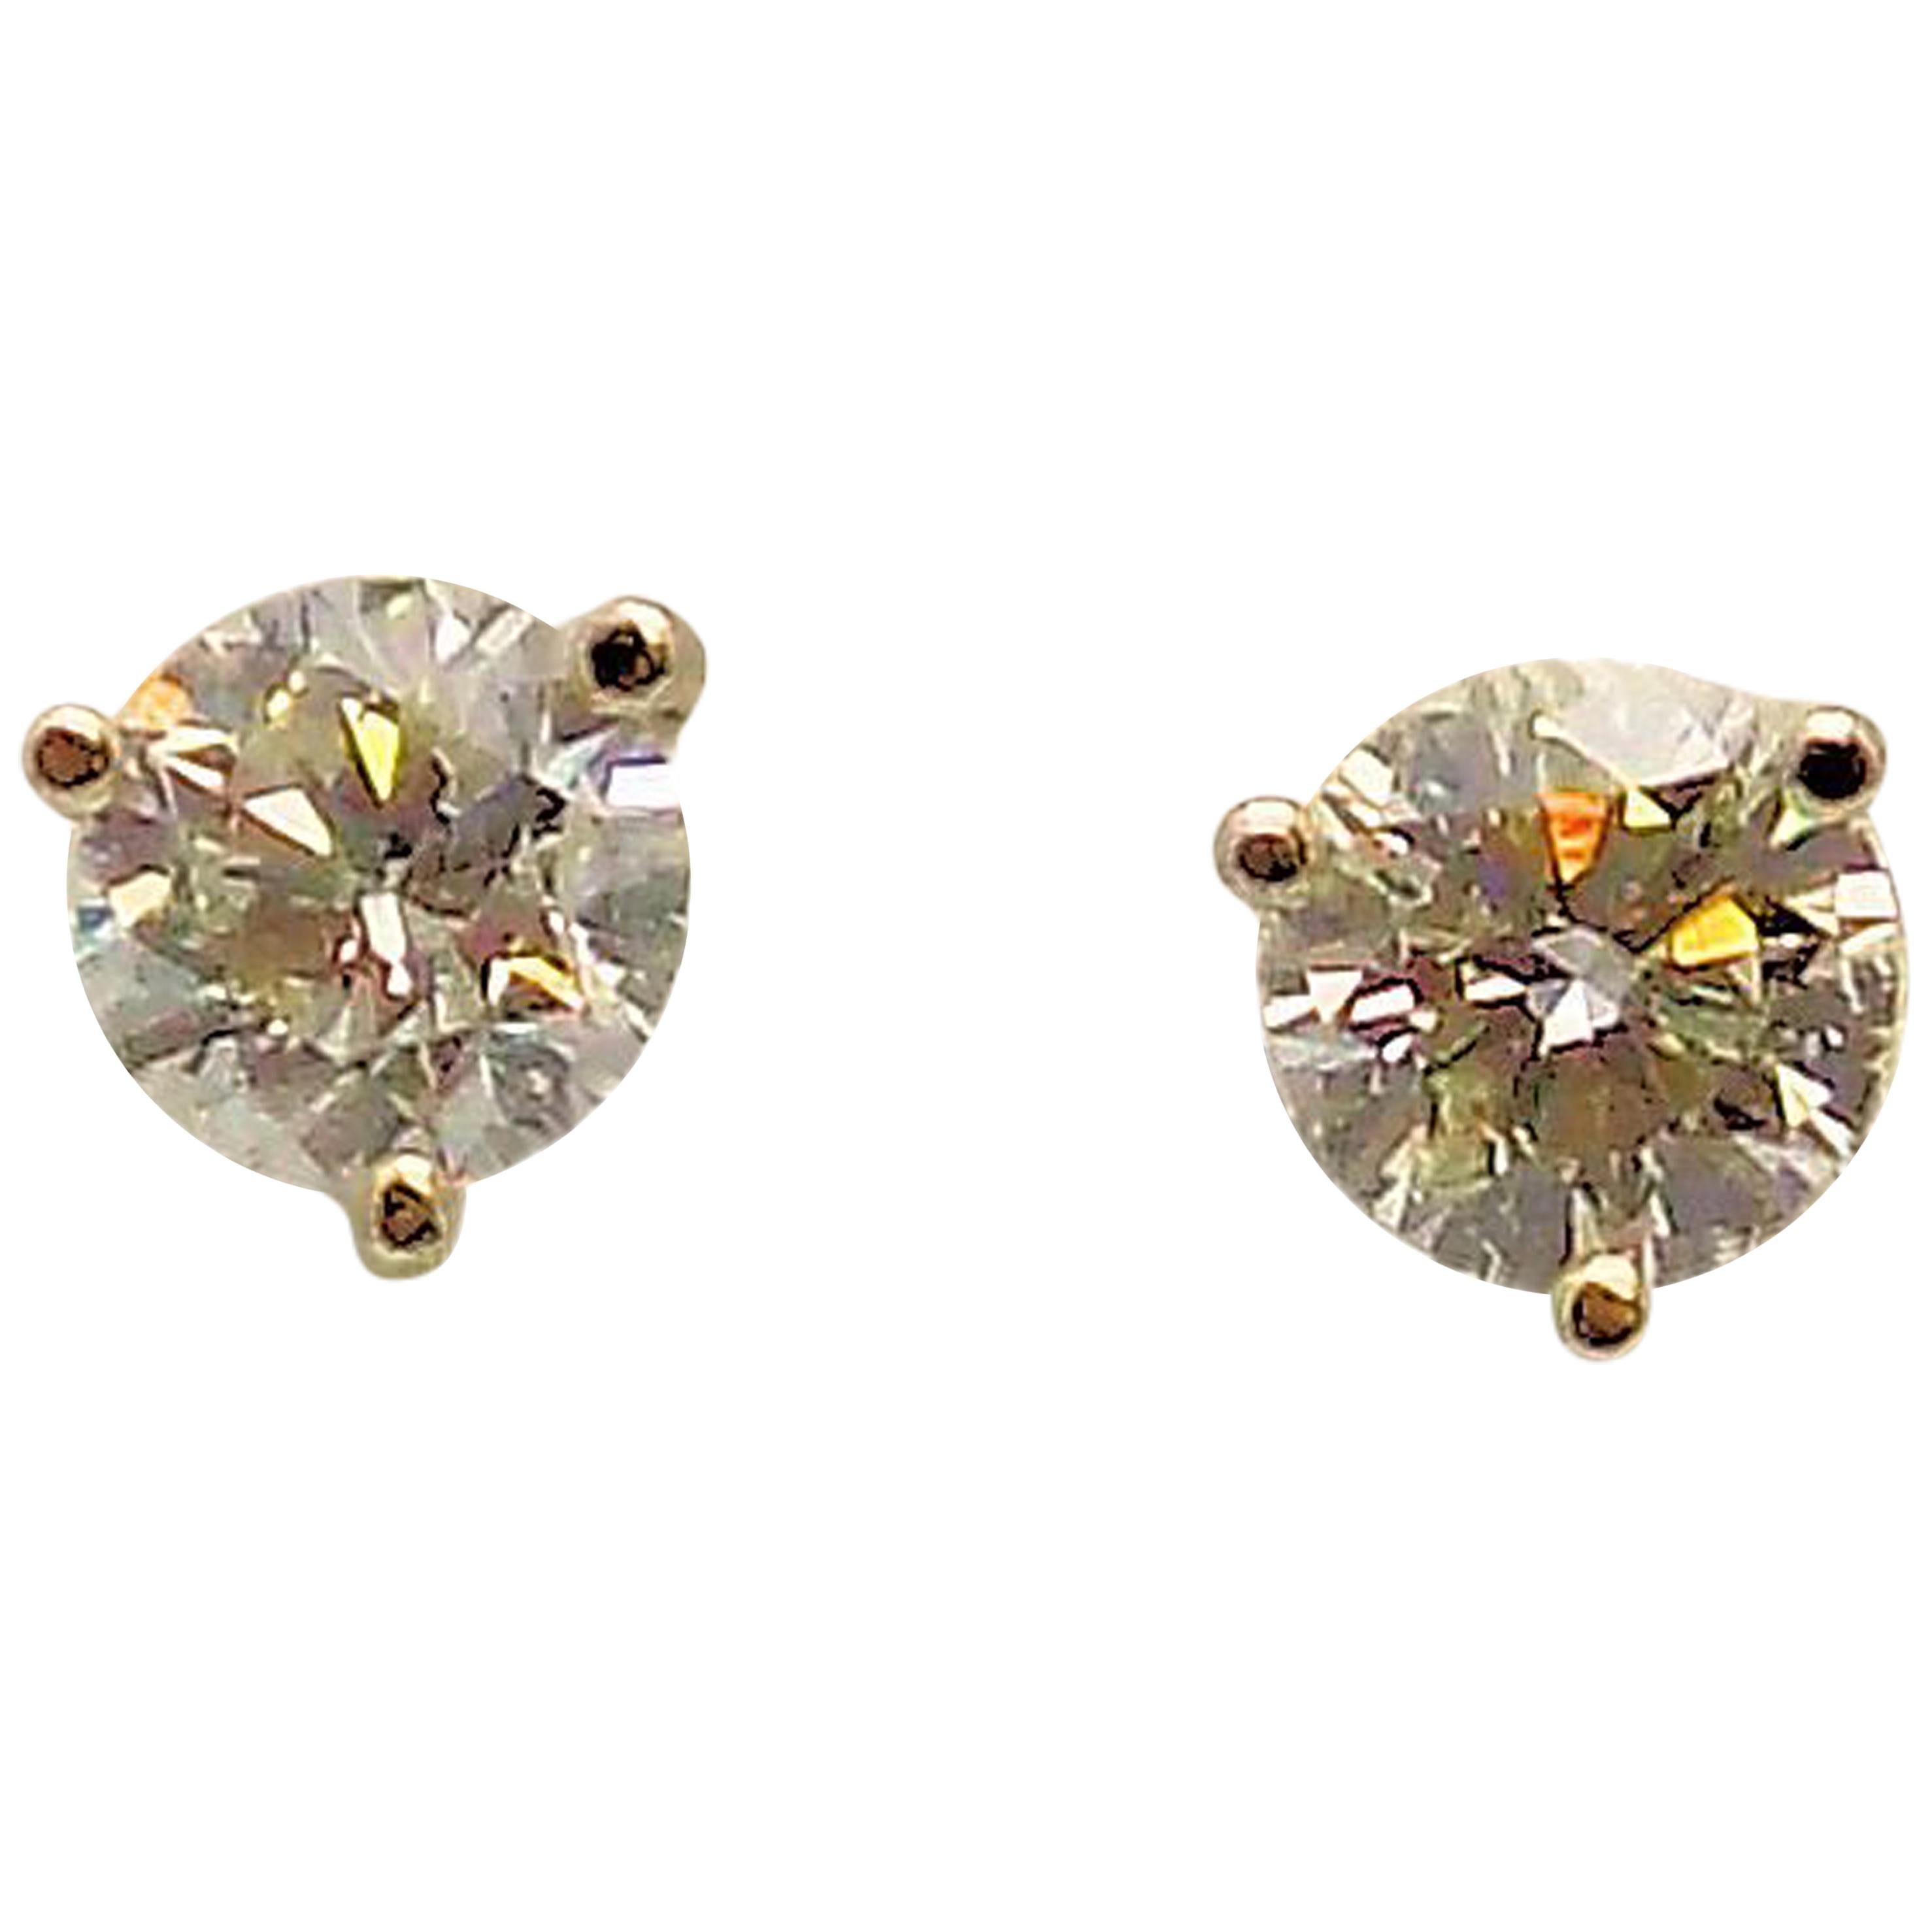 Pair of Diamond Stud Earrings in Martini Setting